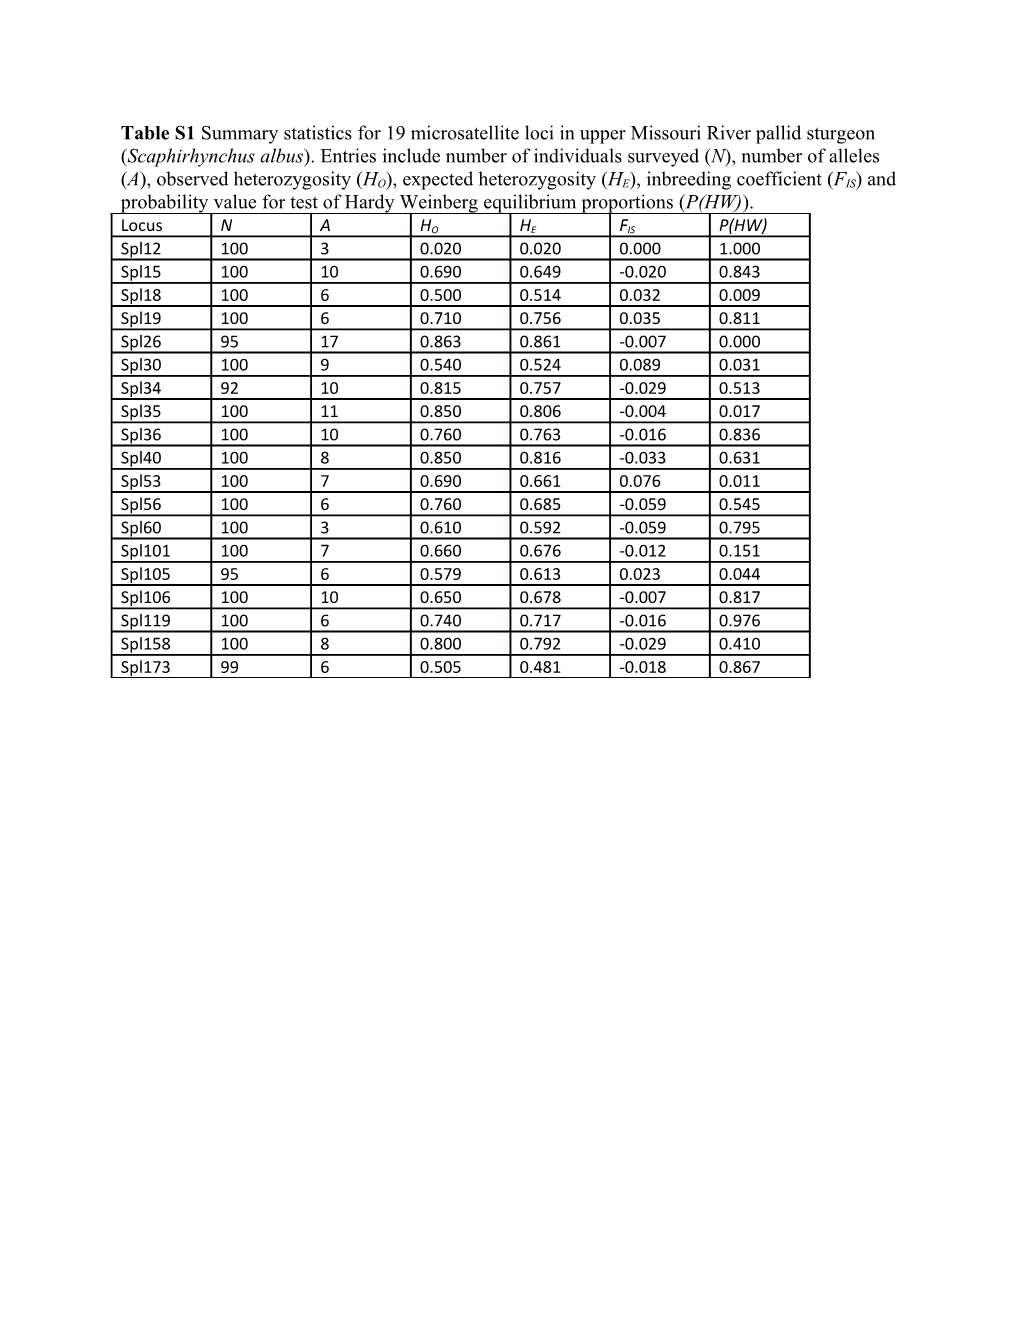 Table S1 Summary Statistics for 19 Microsatellite Loci in Upper Missouri River Pallid Sturgeon